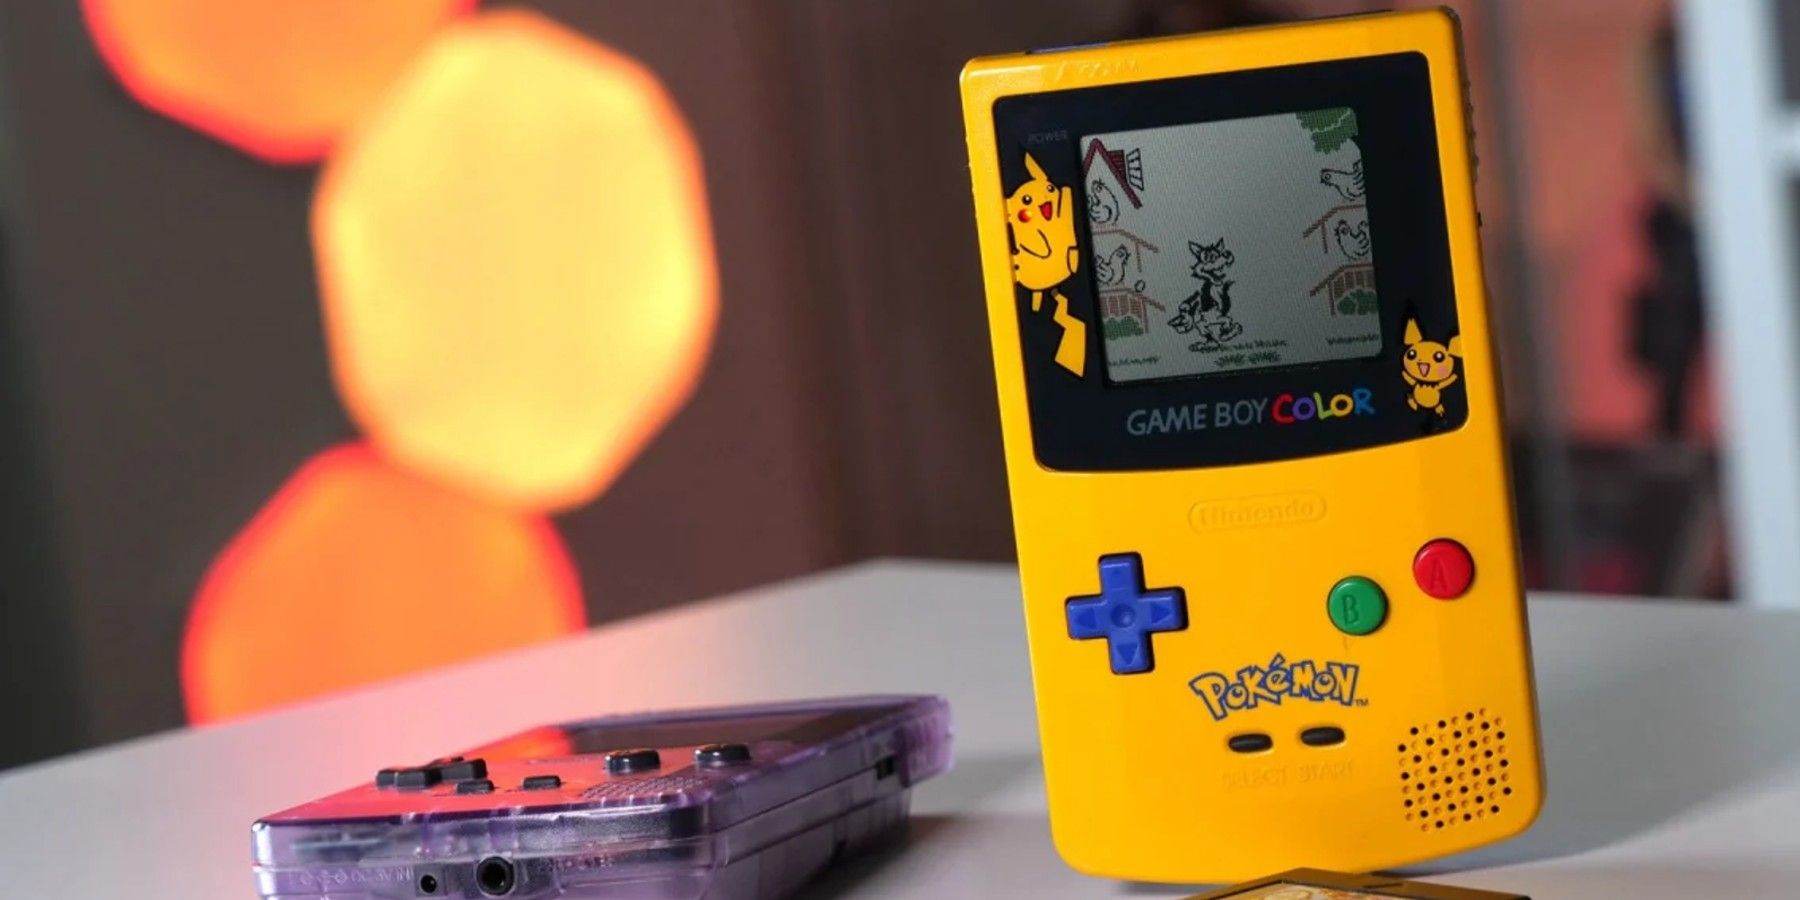 Pikachu Pichu Game Boy Color